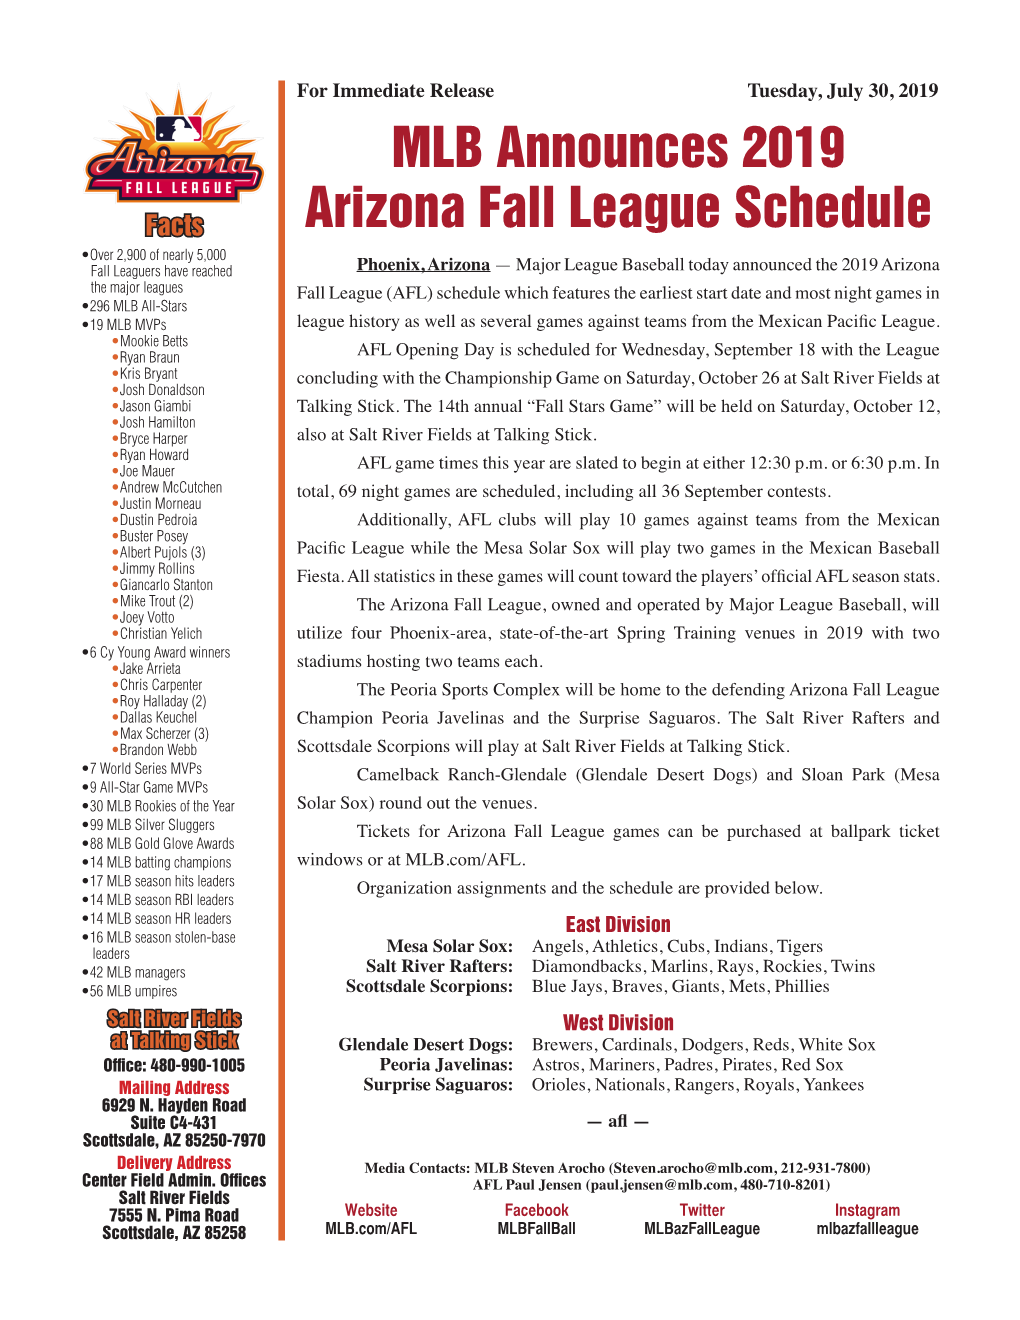 MLB Announces 2019 Arizona Fall League Schedule